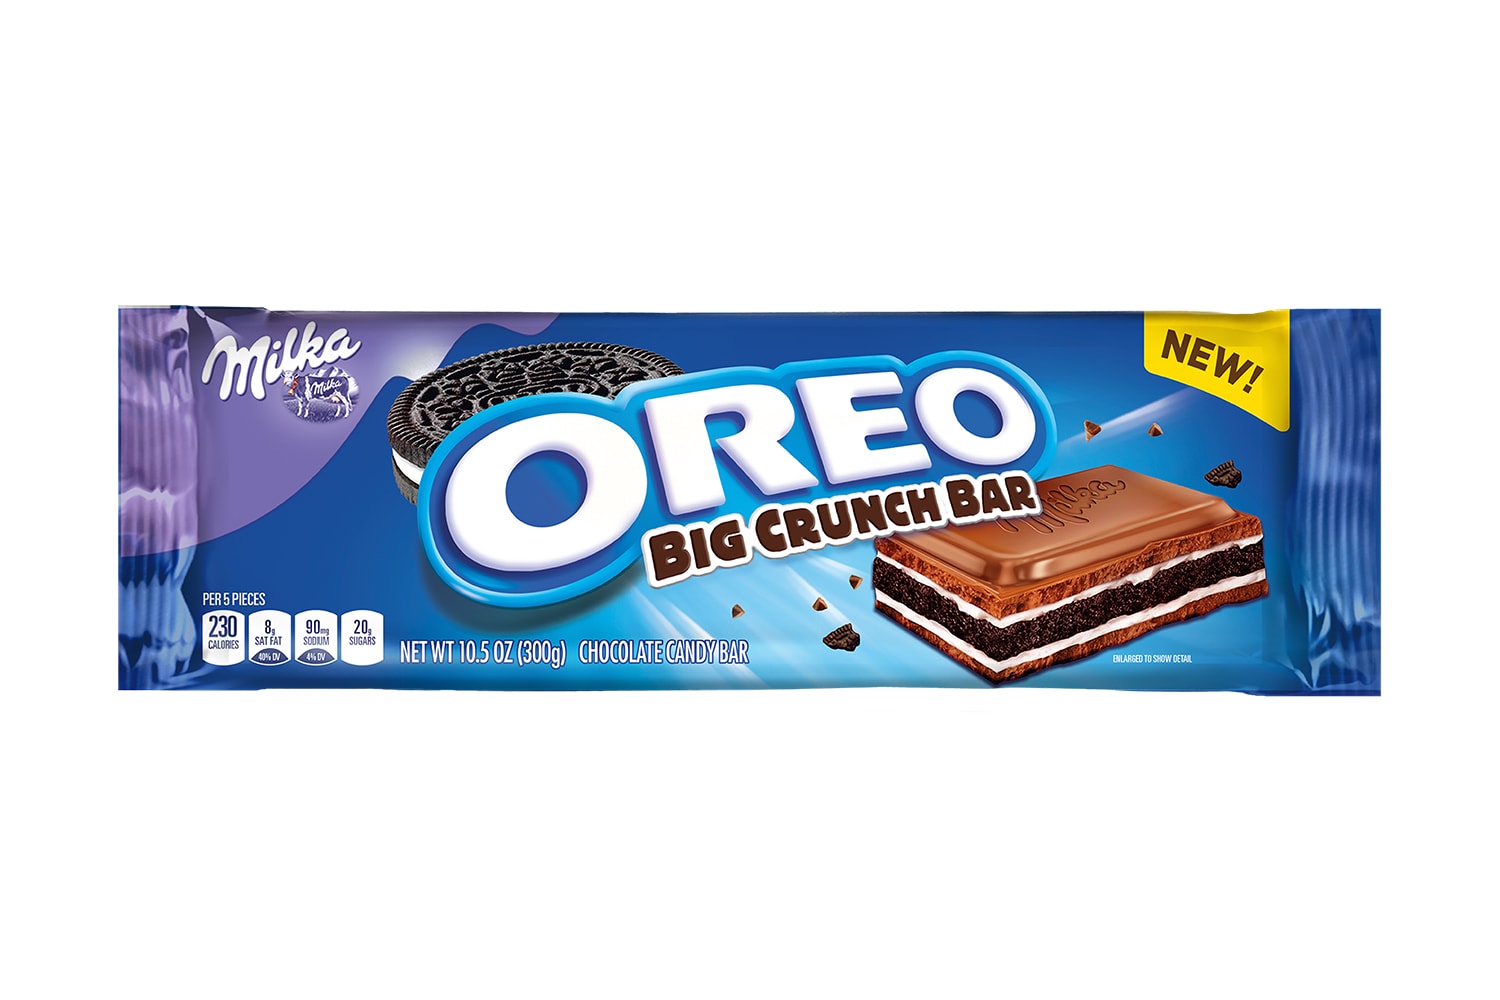 Oreo Milka Chocolate Candy Bar and Big Crunch Bar